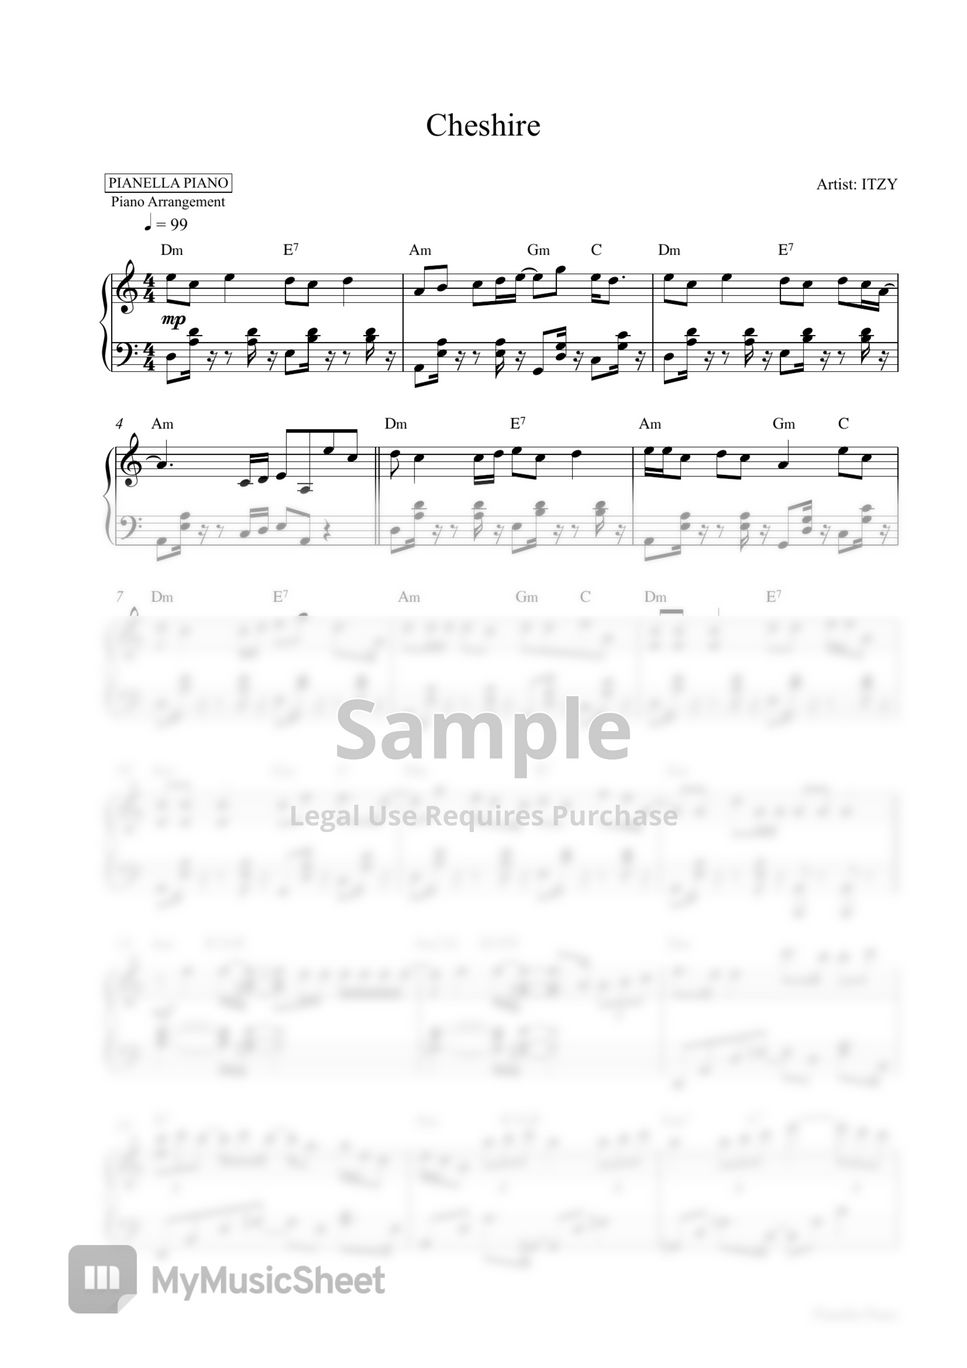 ITZY - Cheshire (Piano Sheet) by Pianella Piano